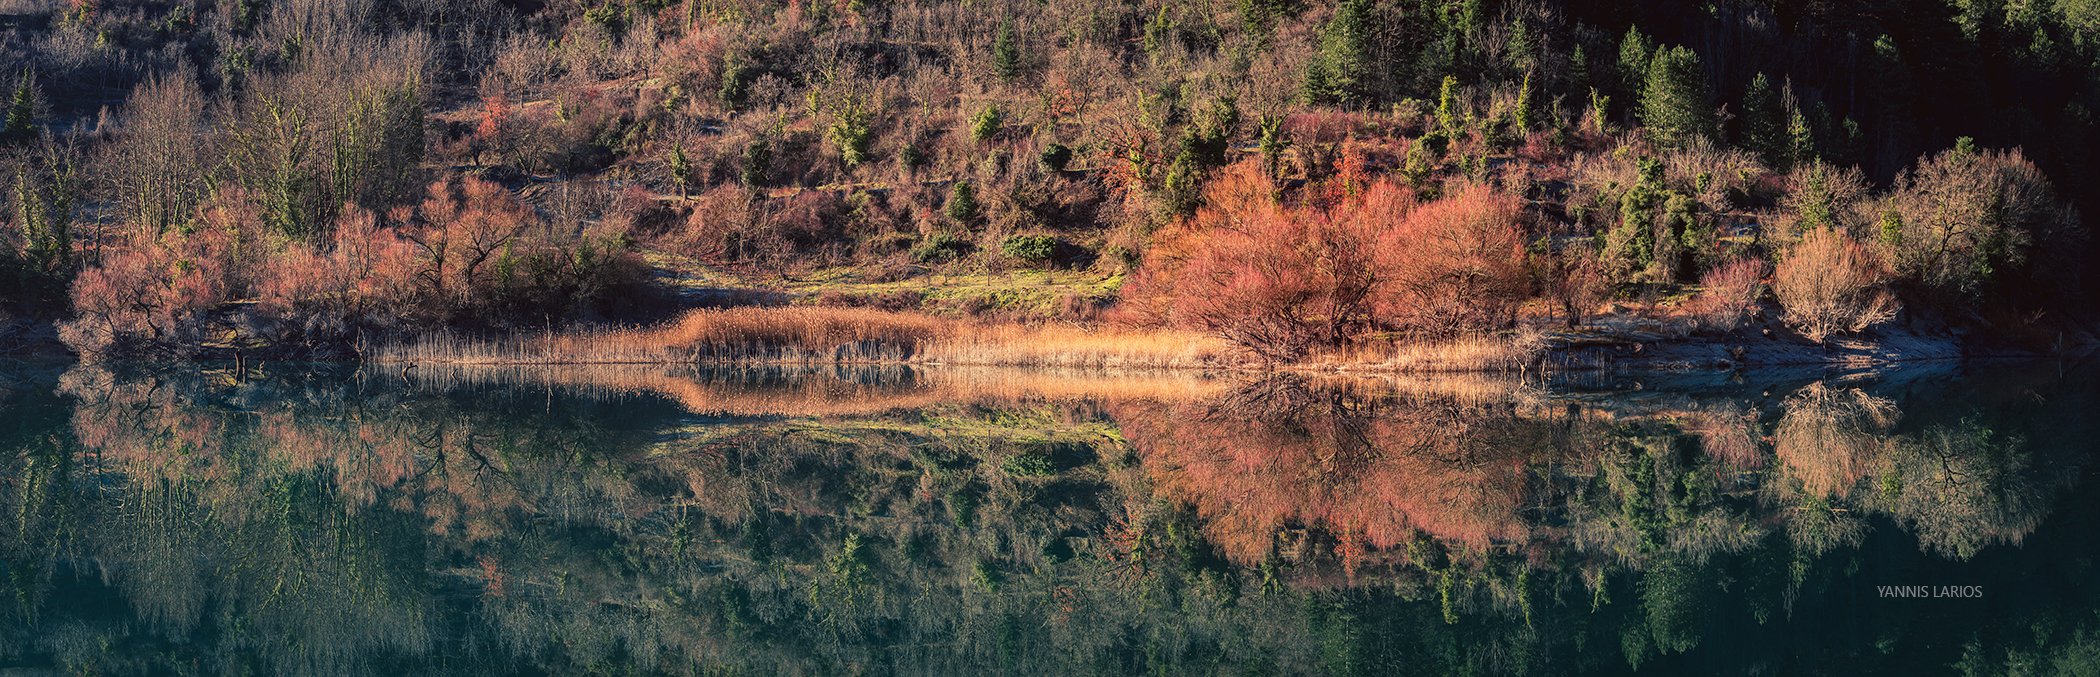 The Perfect Reflection — Yannis Larios Landscape Photography Artwork - Buy  Art Online